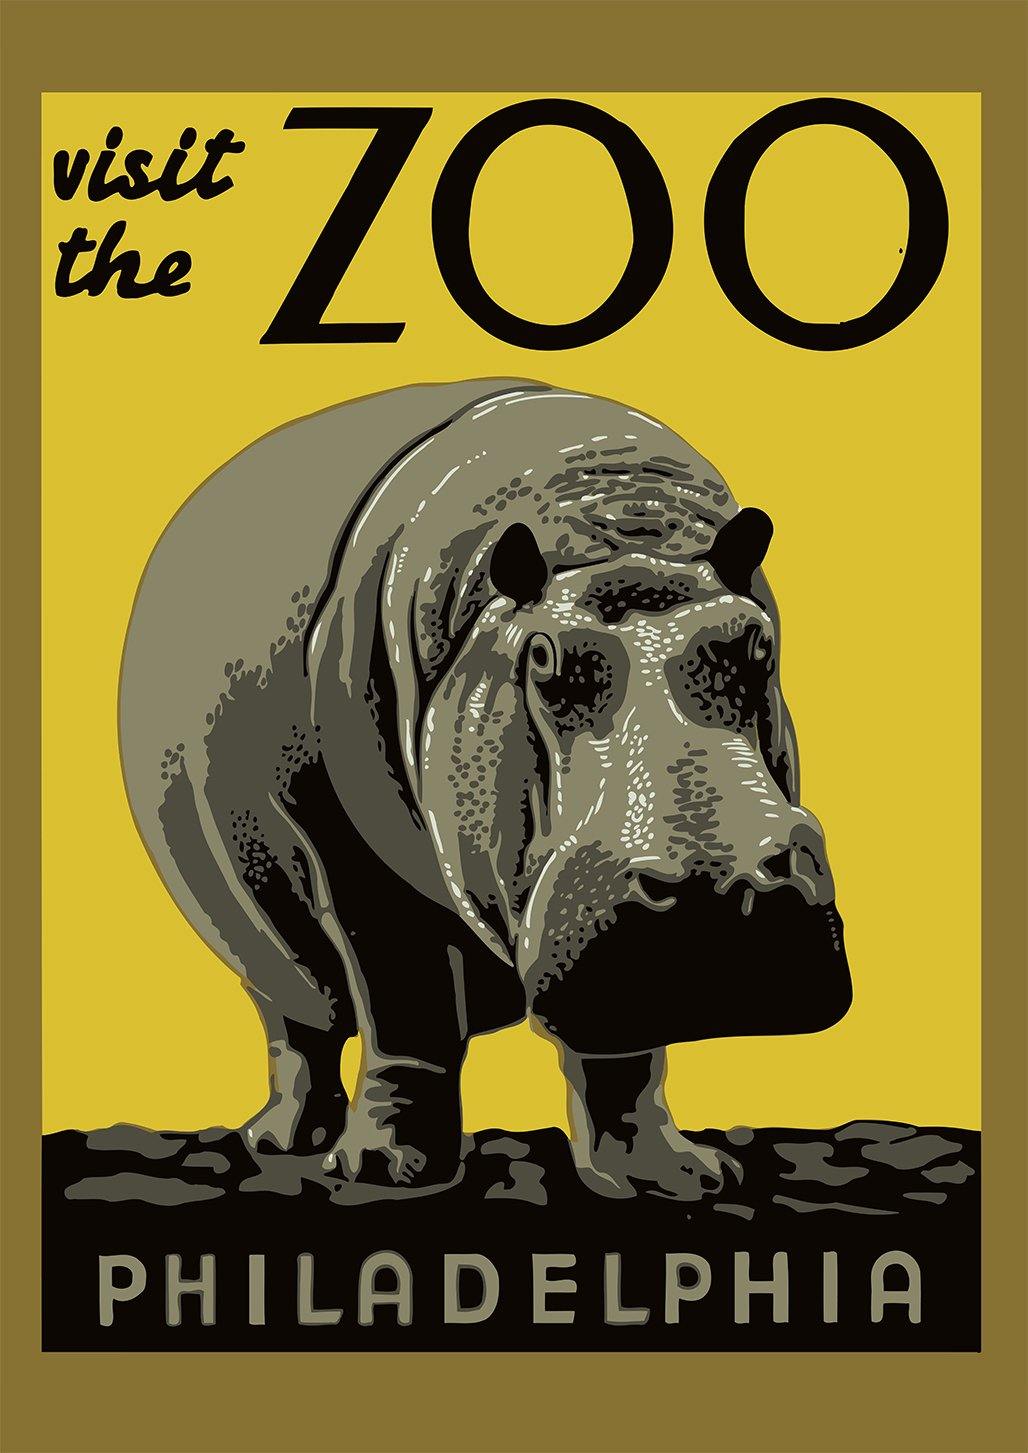 PHILADELPHIA ZOO POSTER: Vintage Visit the Zoo Hippo Print - Pimlico Prints